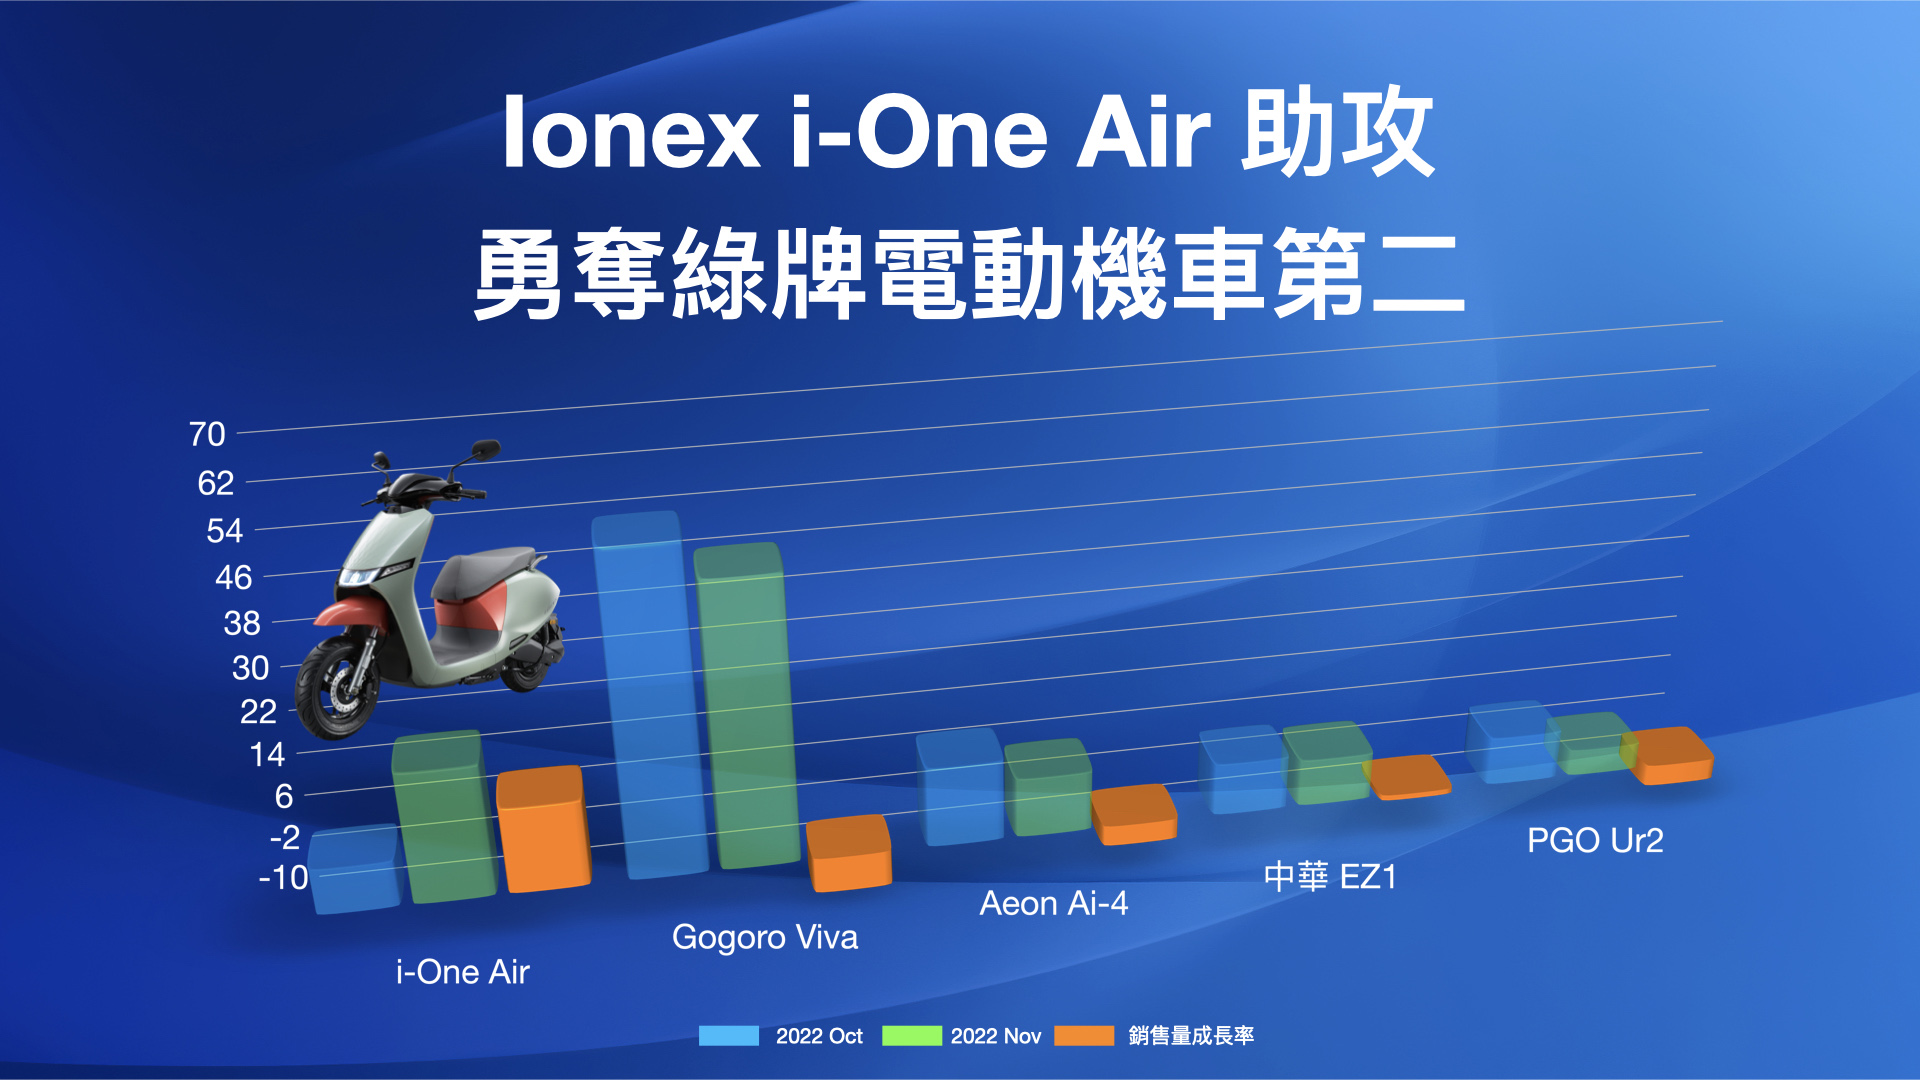 2. Ionex光陽電動車產品戰略奏效！訴求輕巧靈活、最佳比例的i-One Air上市後立即獲得消費者廣大迴響，成為綠牌電車市場中唯一「正成長」的熱銷車款！.jpg